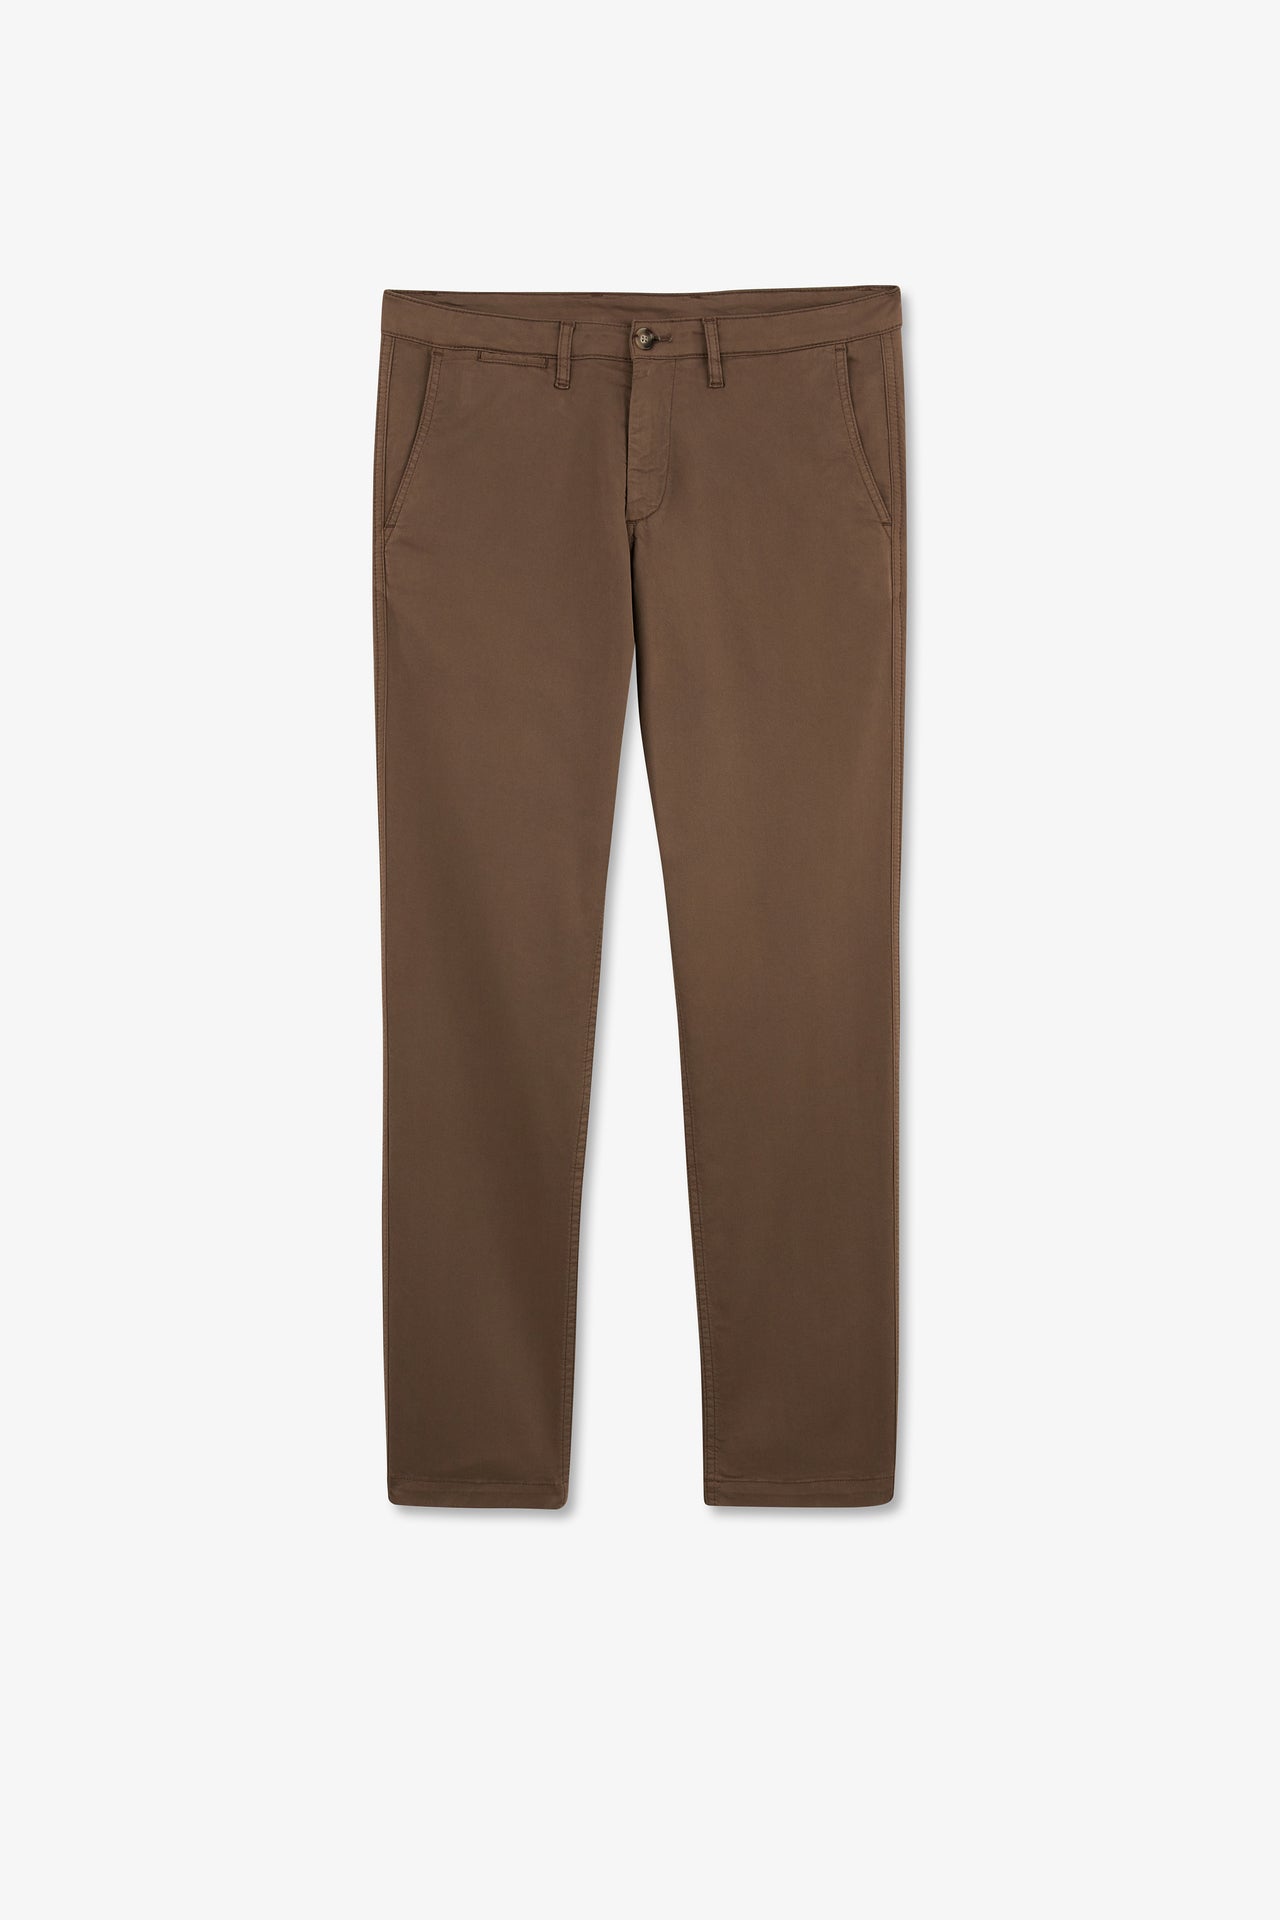 Pantalon chino marron - Image 2